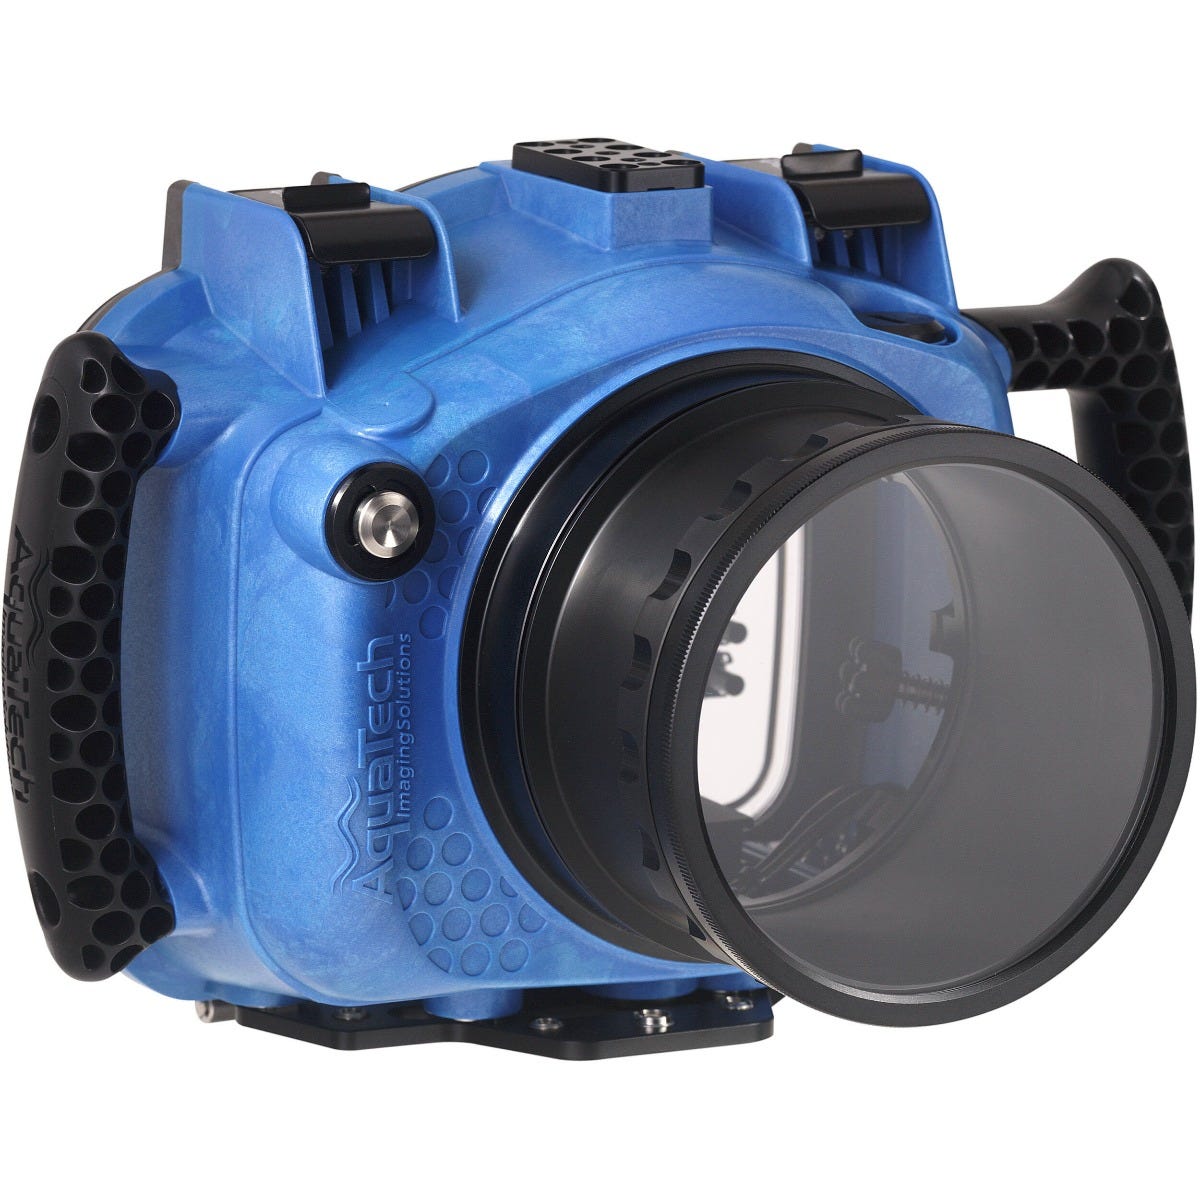 Image of AquaTech REFLEX Sport Housing for Nikon D850 - Blue